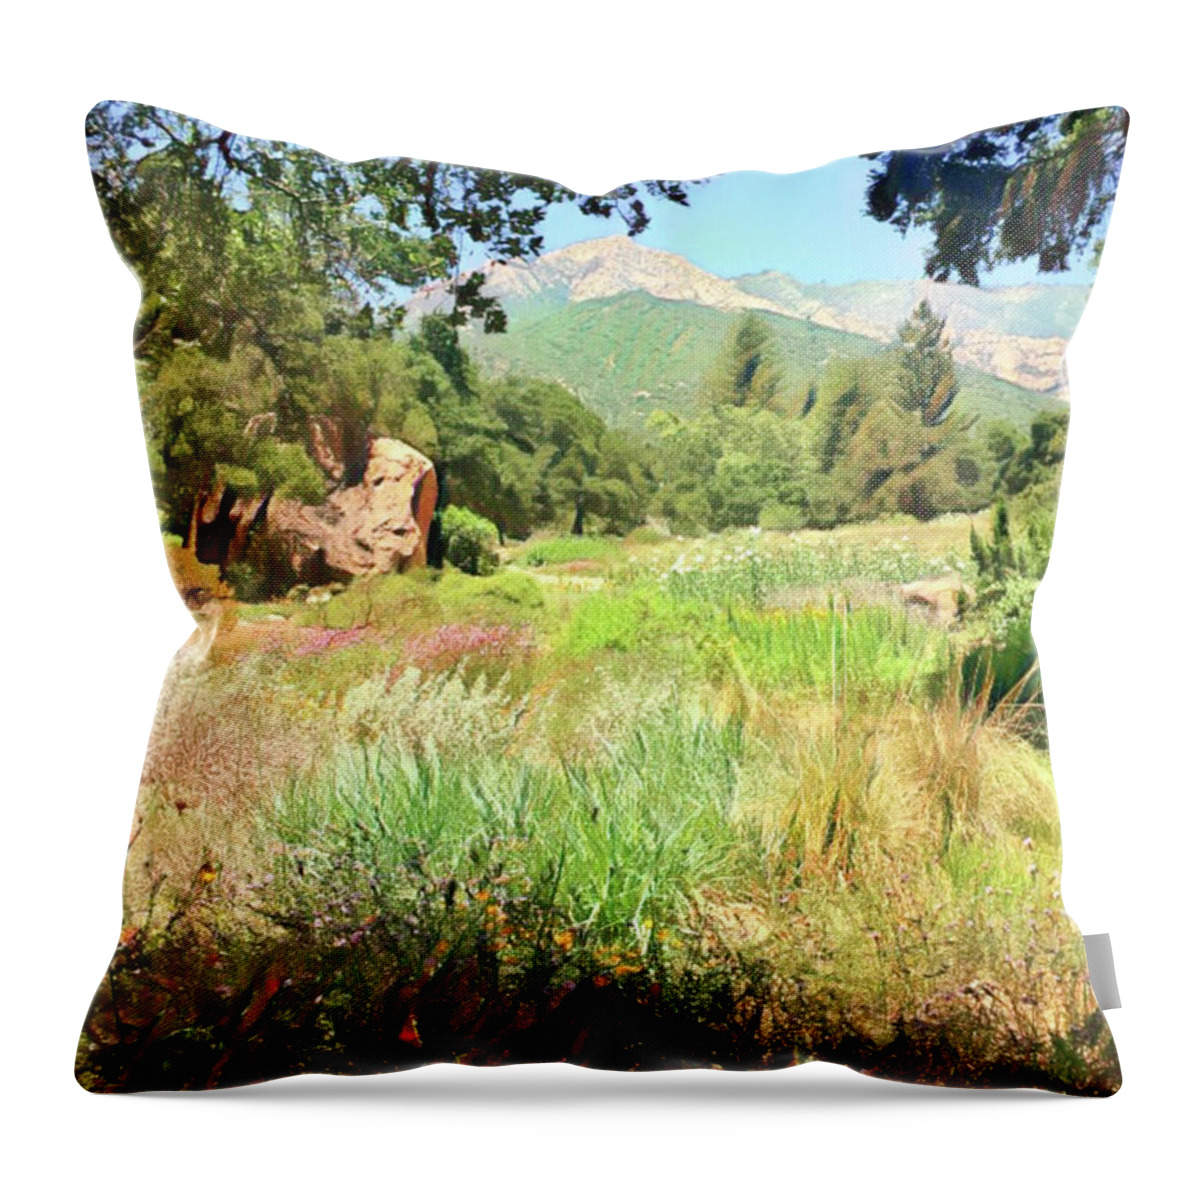 Santa Barbara Throw Pillow featuring the digital art Santa Barbara Summer by Jackie MacNair